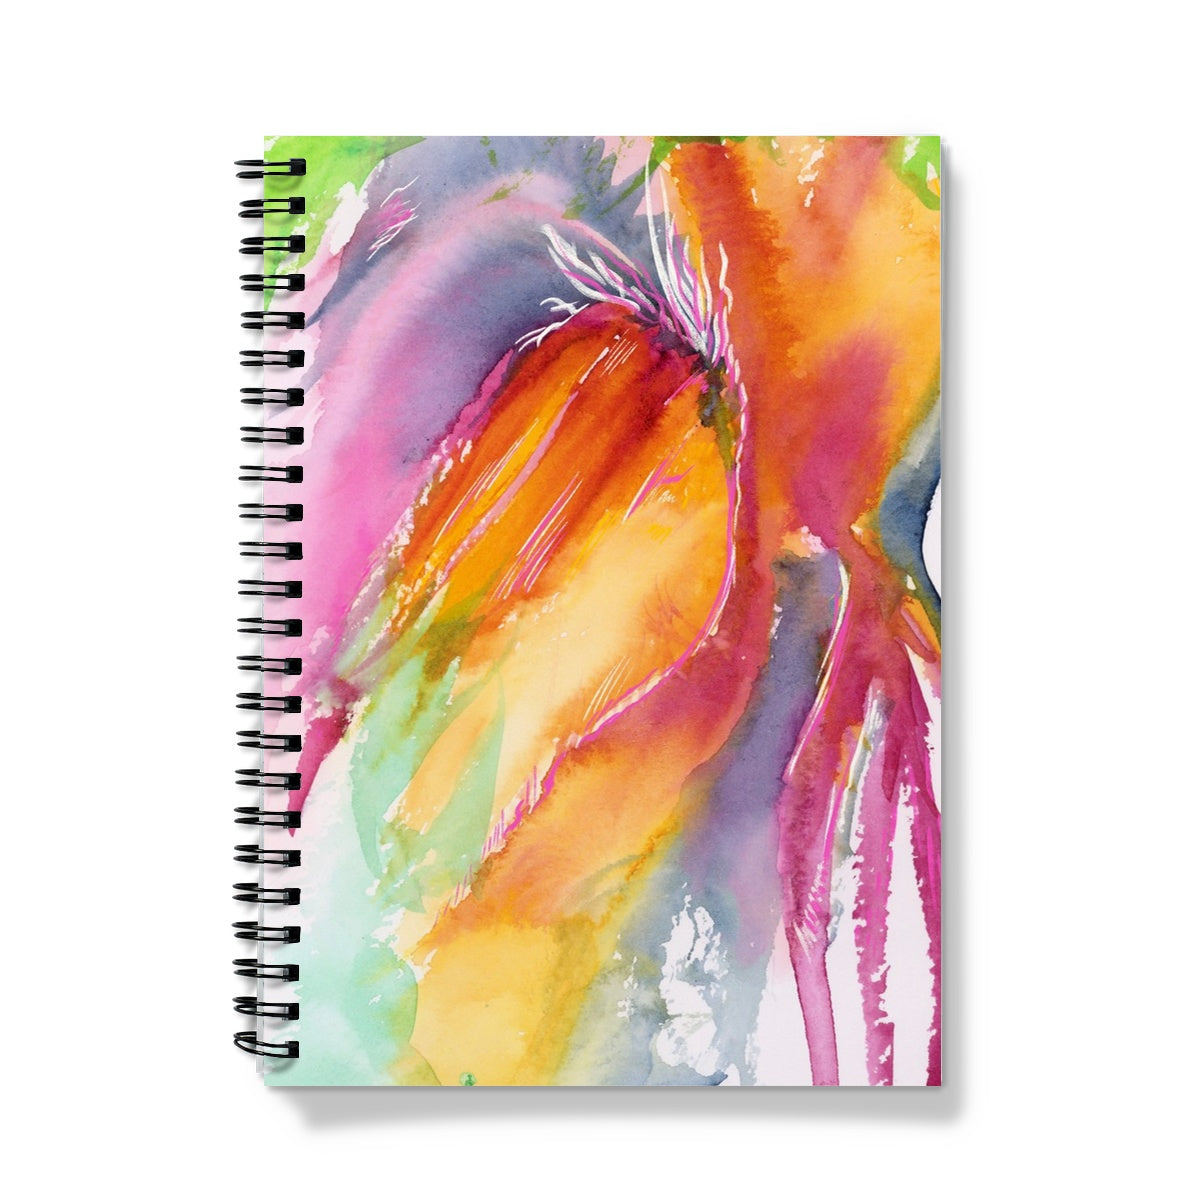 Fire and Swirls  Notebook